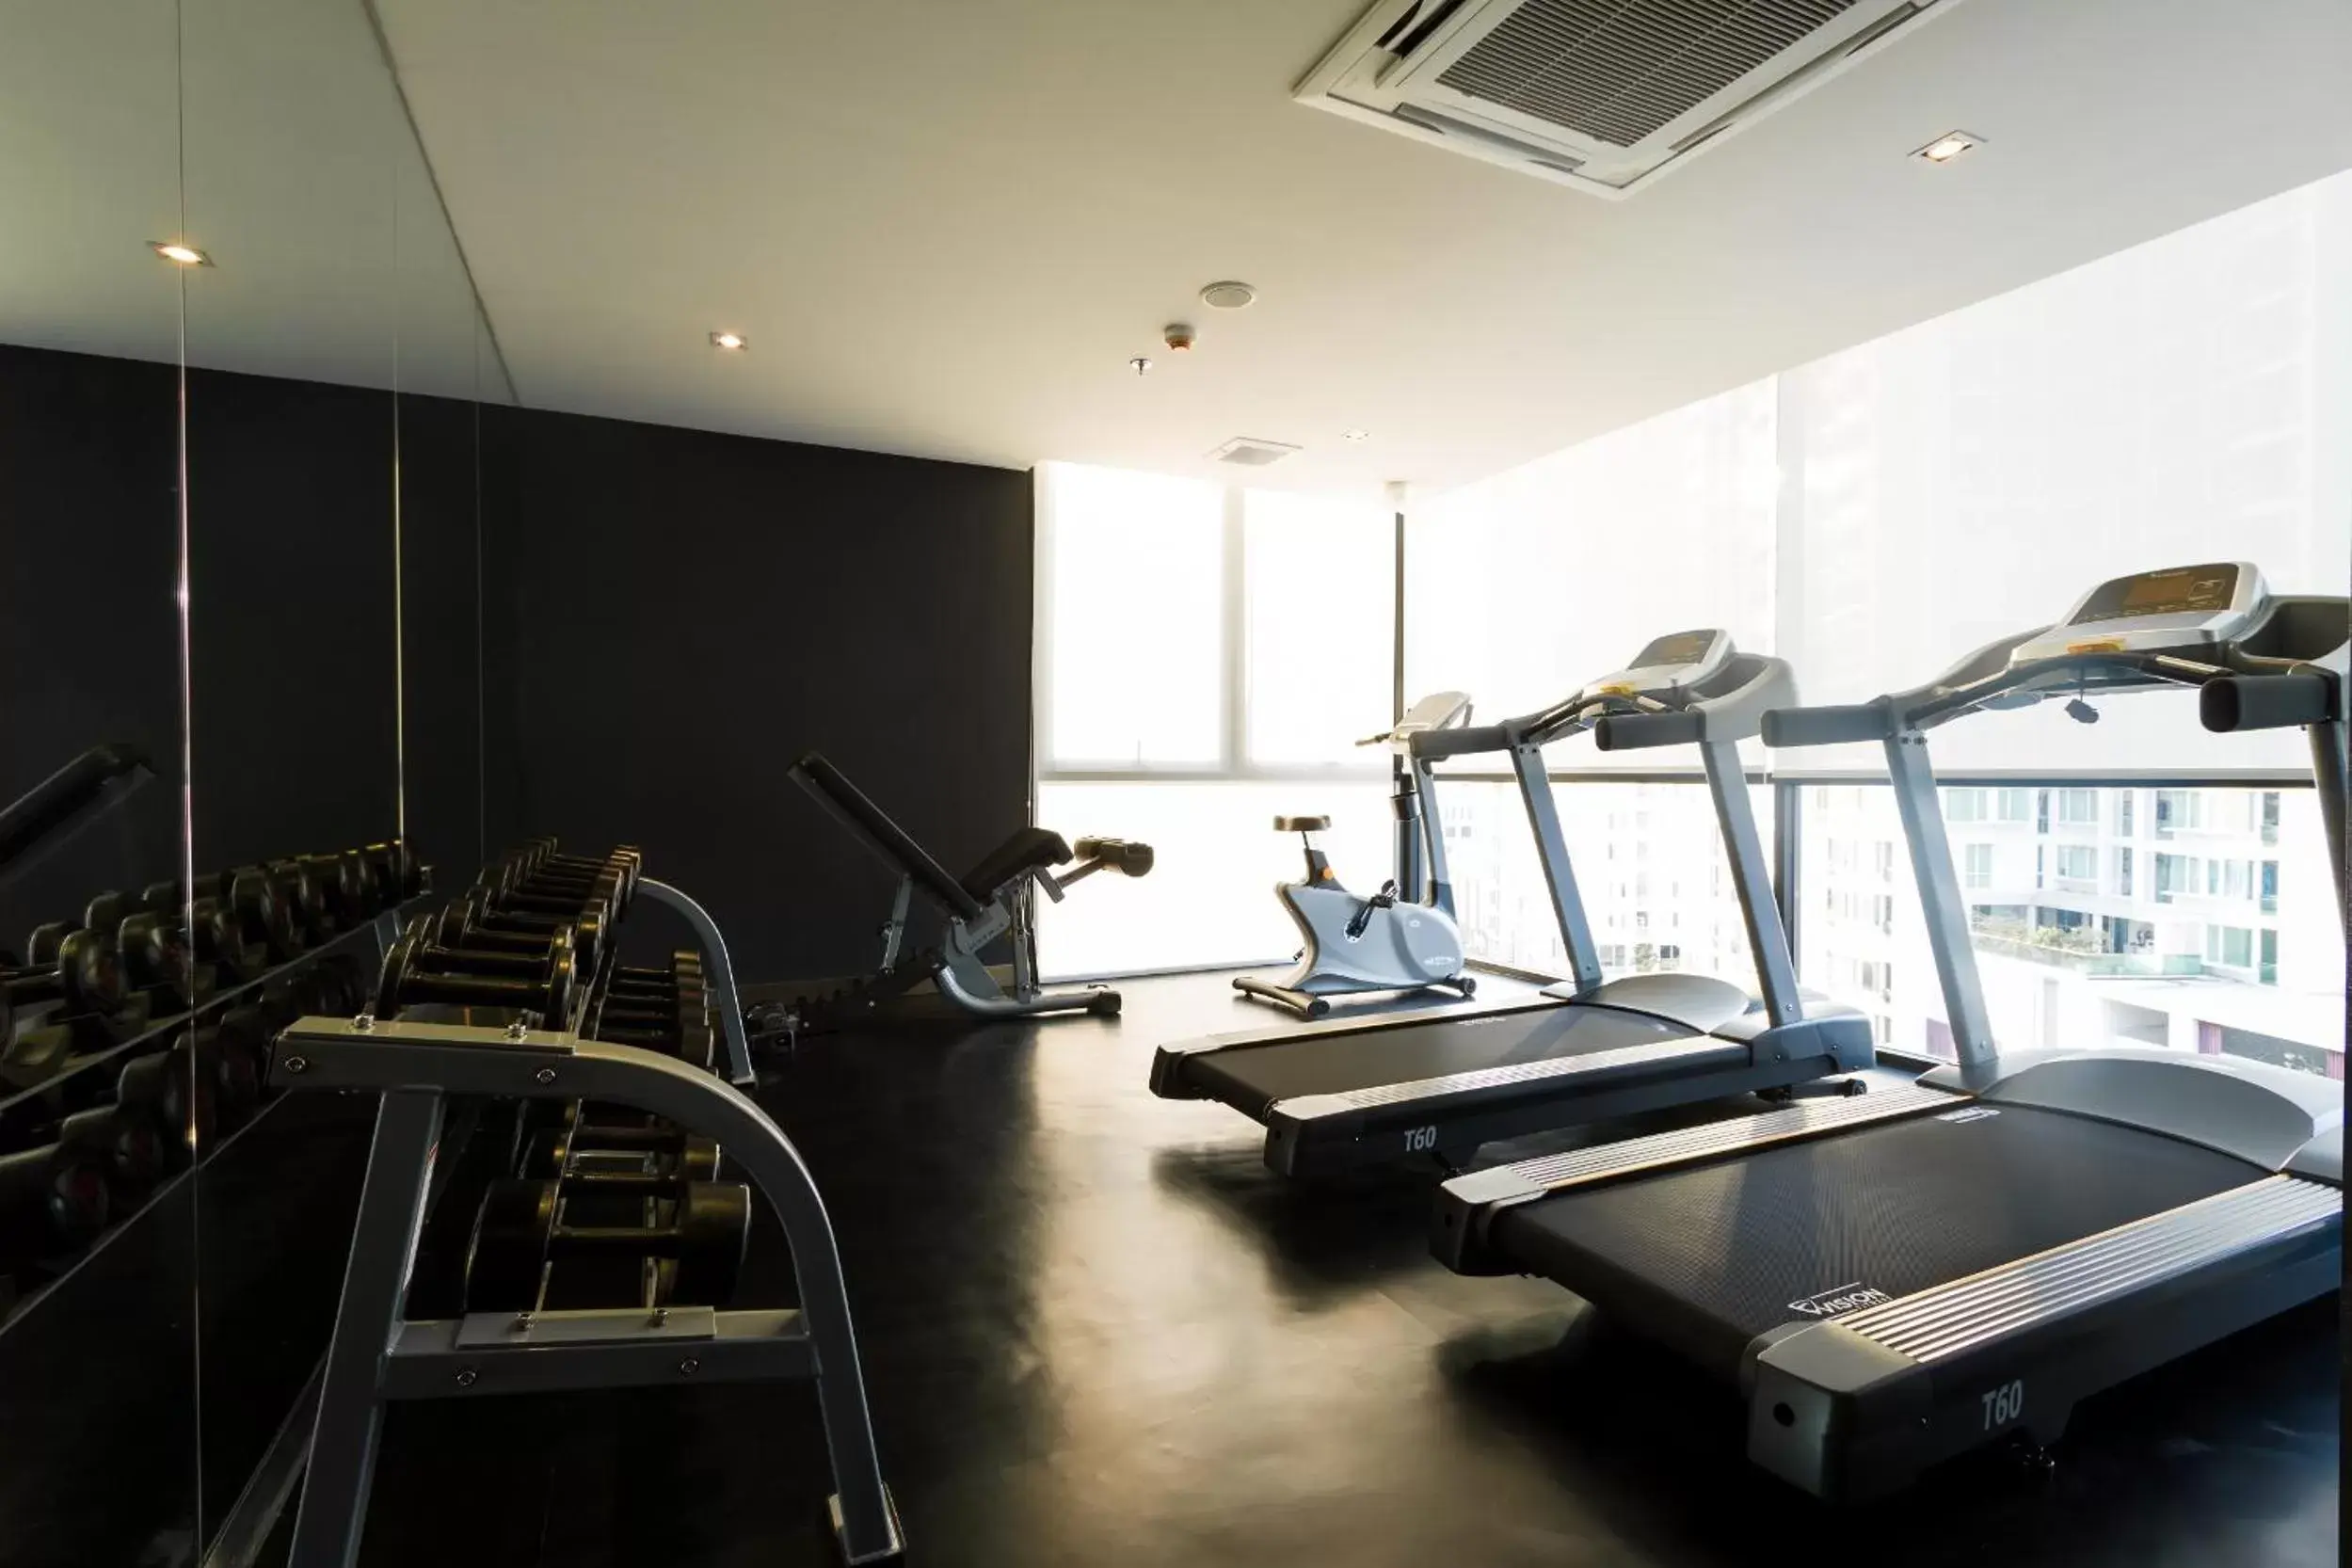 Fitness centre/facilities, Fitness Center/Facilities in Zazz Urban Bangkok